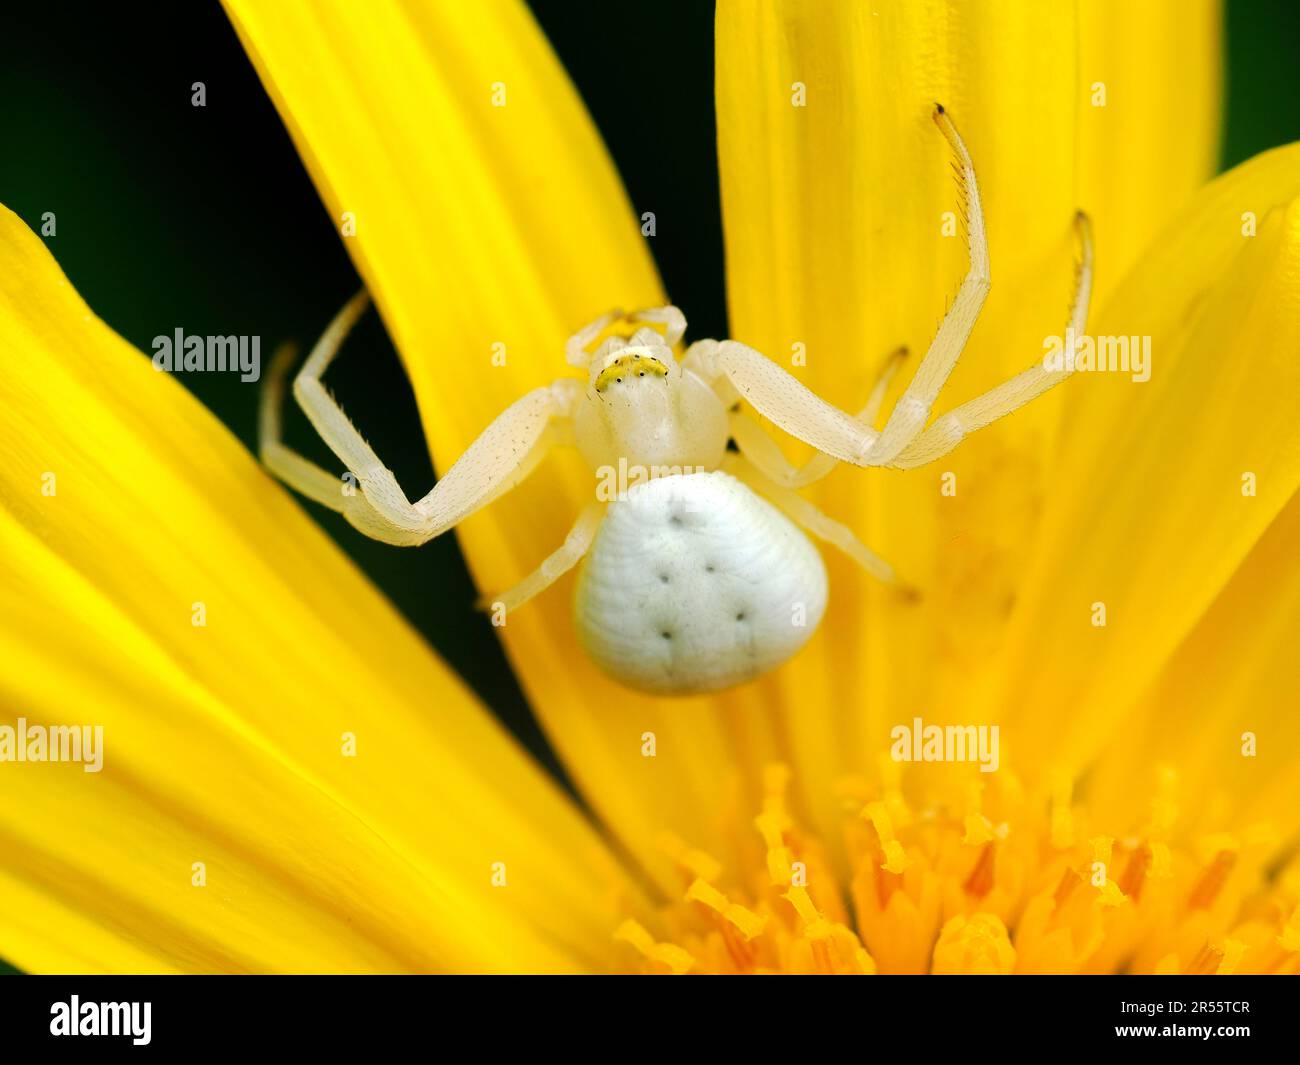 Macro of white crab spider (Misumena vatia) on yellow daisy flower seen from above Stock Photo